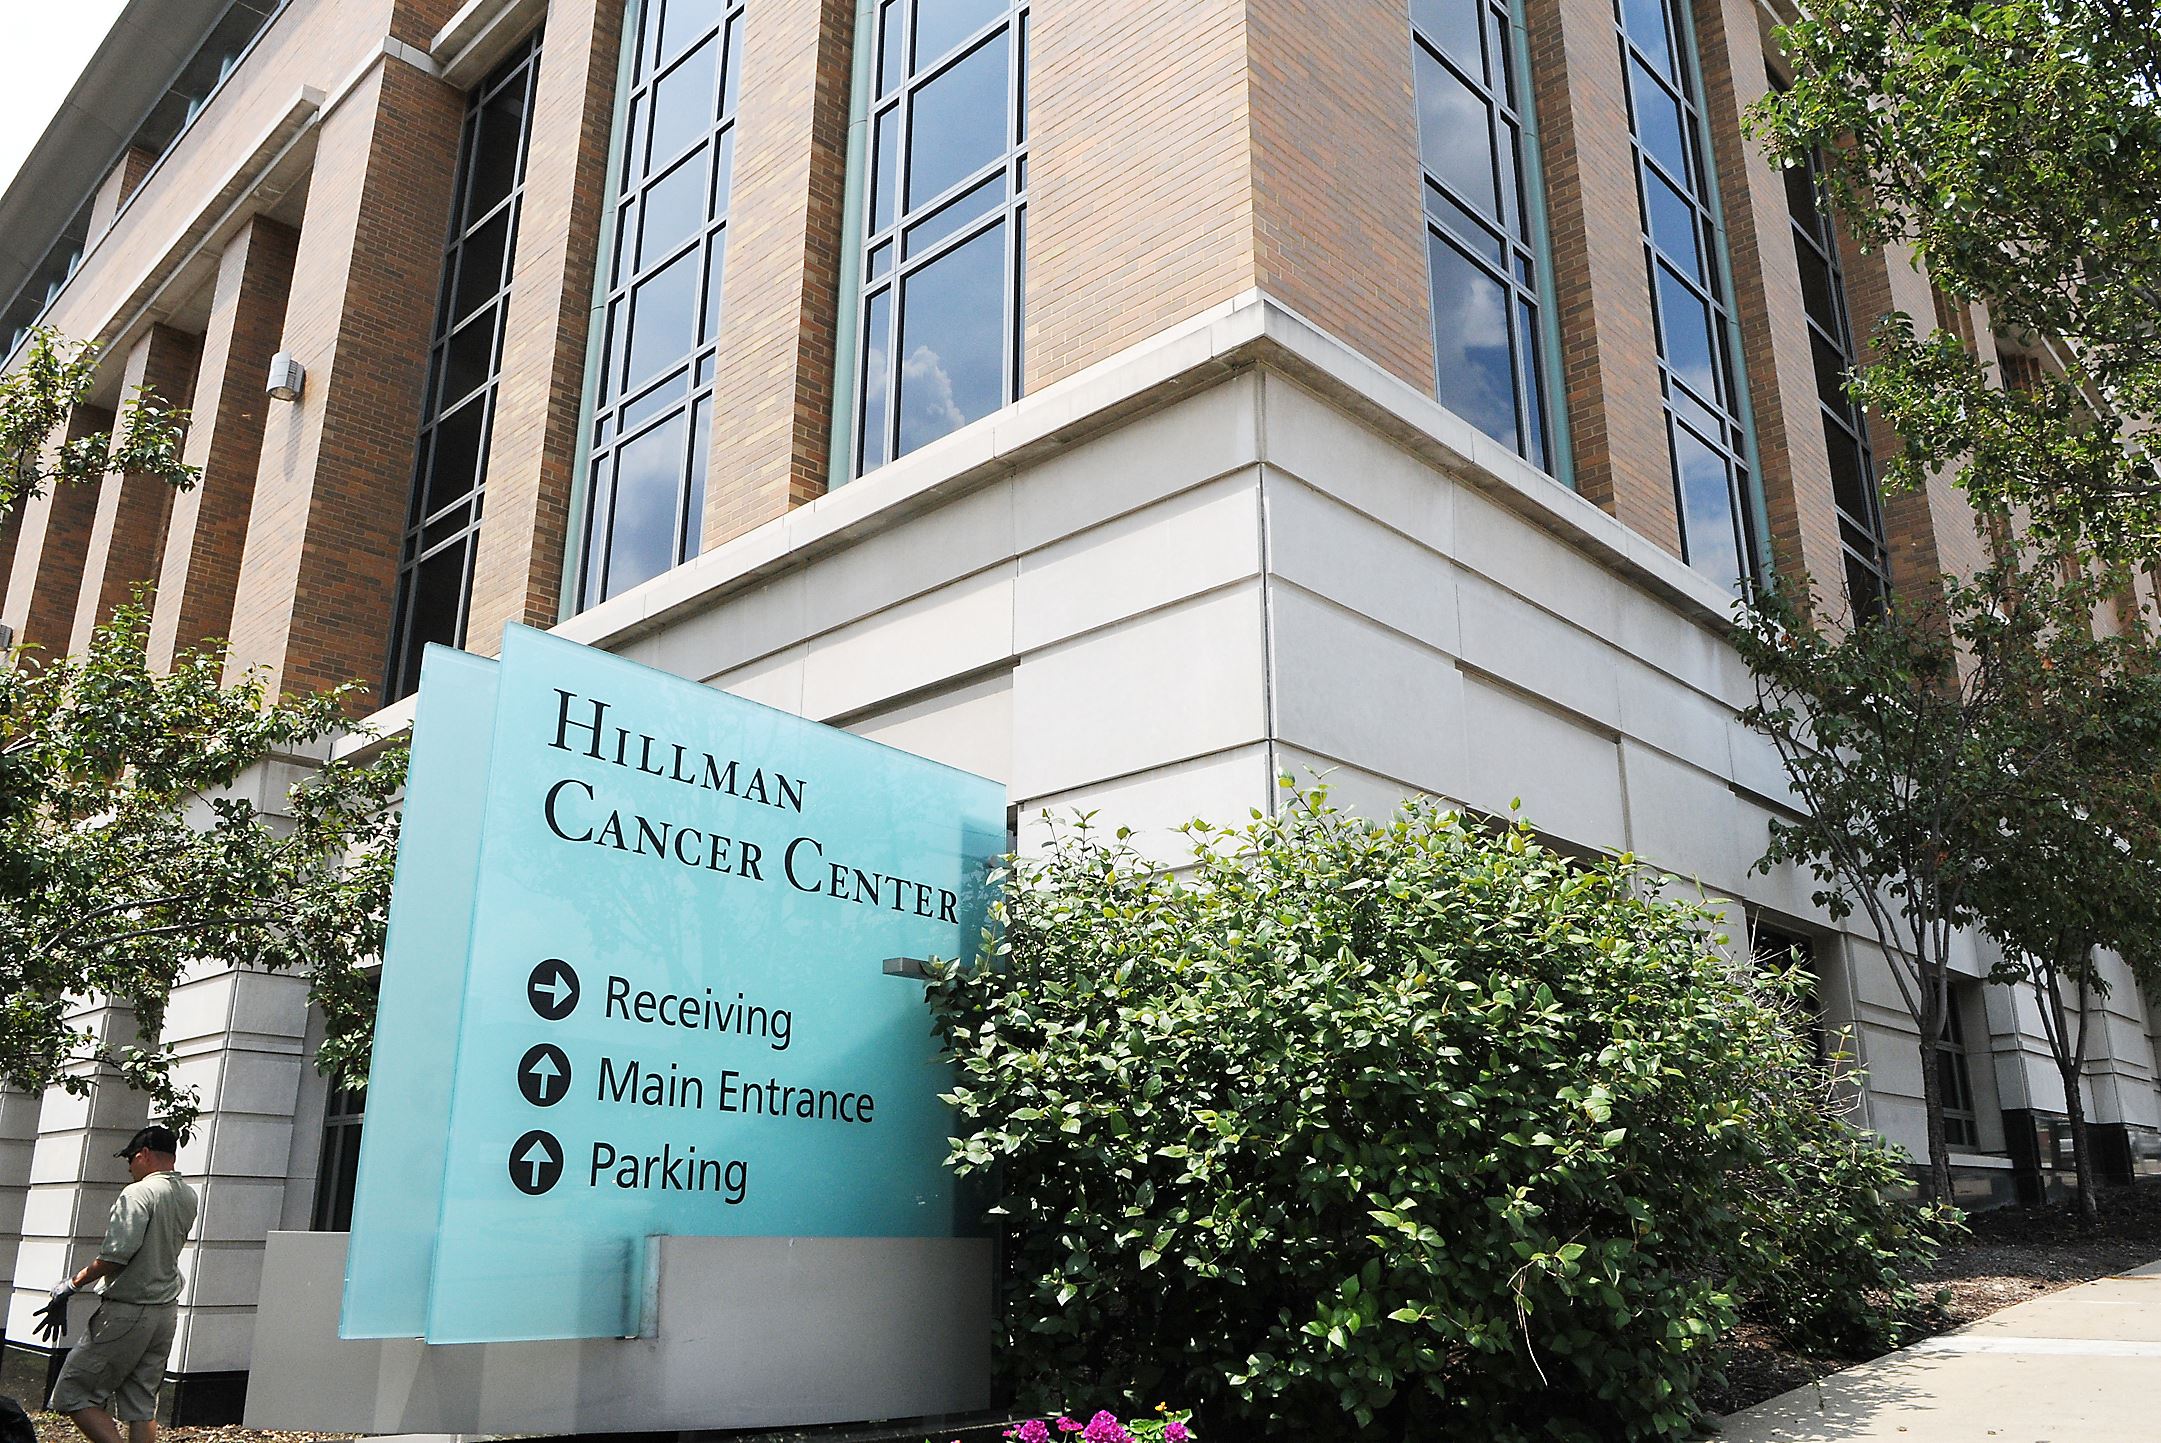 Hillman Cancer Center